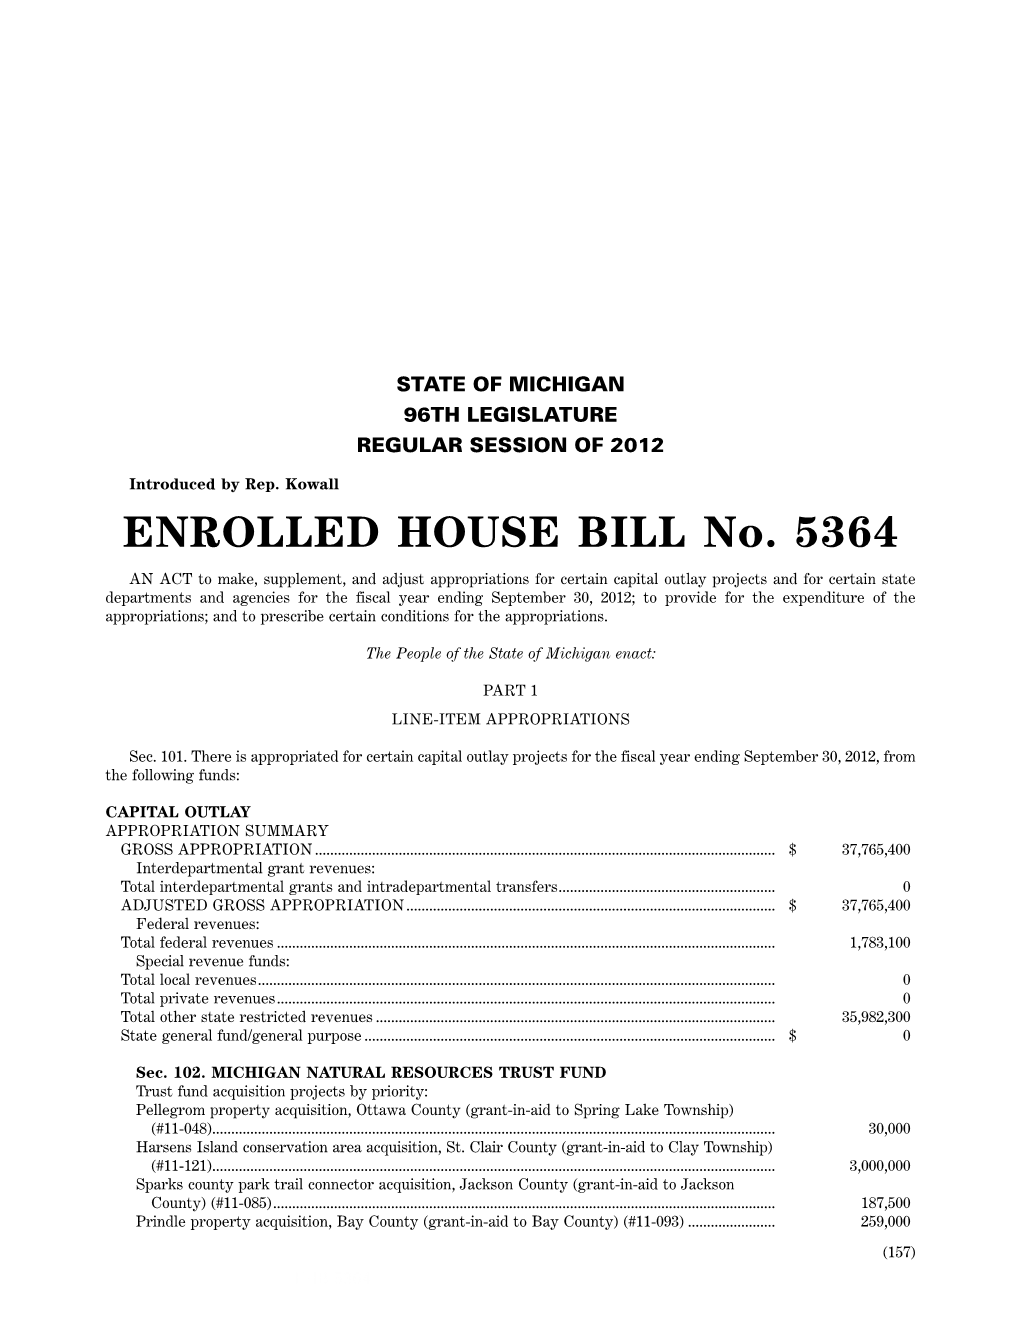 ENROLLED HOUSE BILL No. 5364